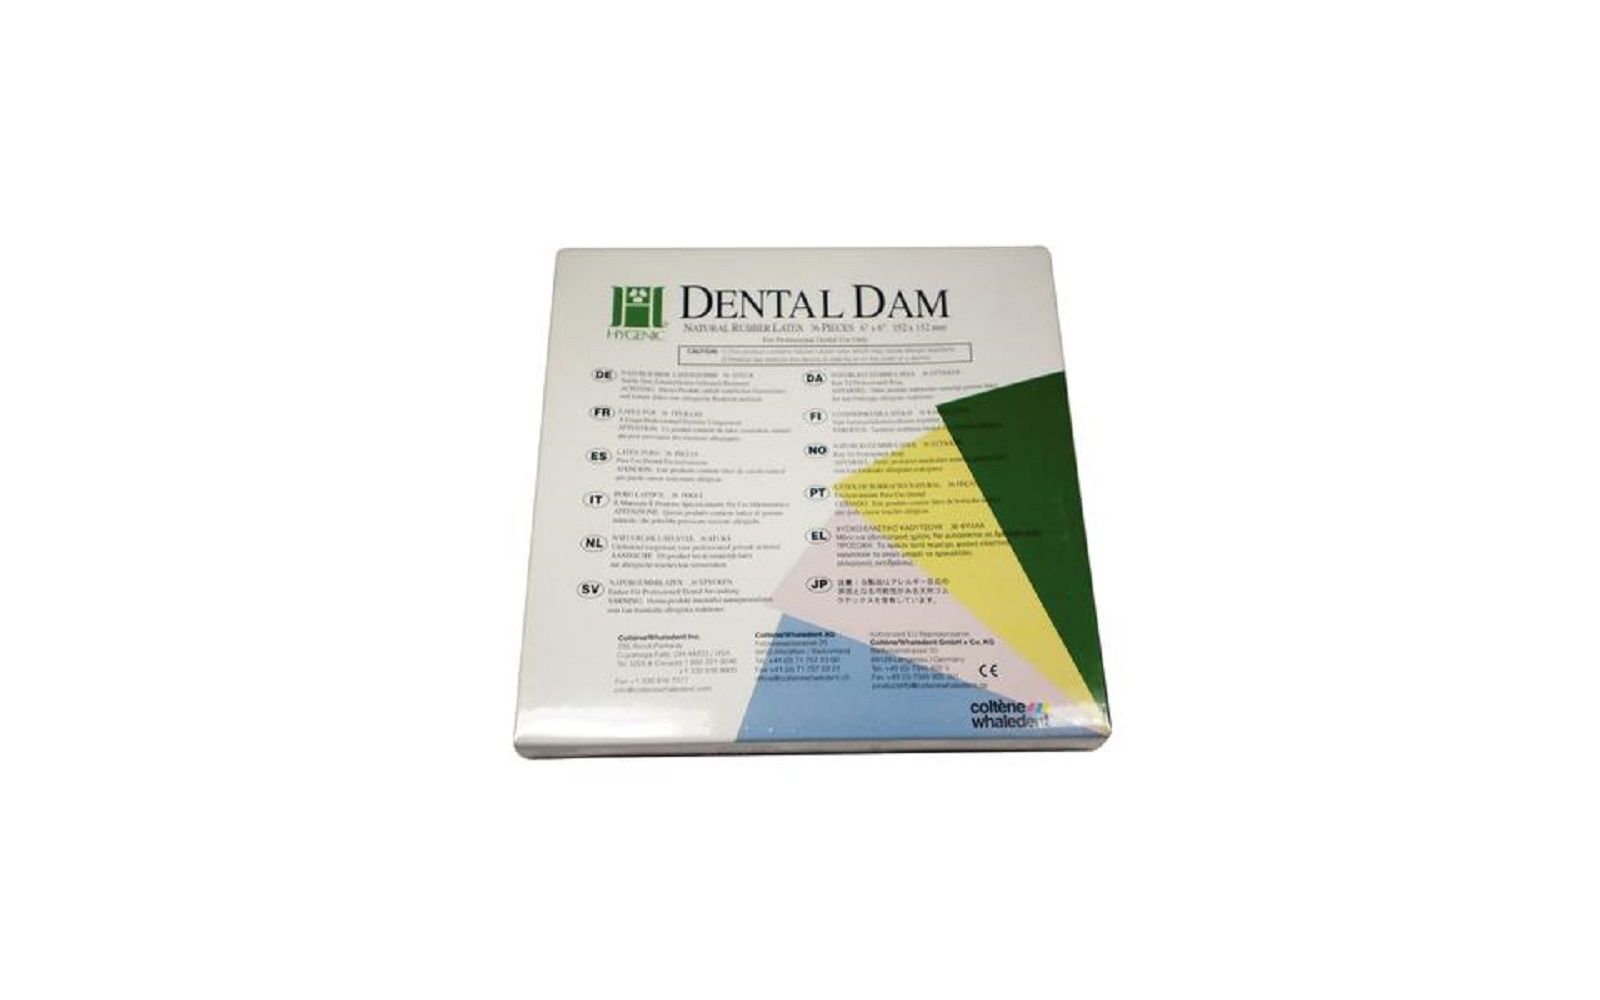 Hygenic® latex dental dam – children's, ready cut, 5" x 5", 52/pkg - coltene